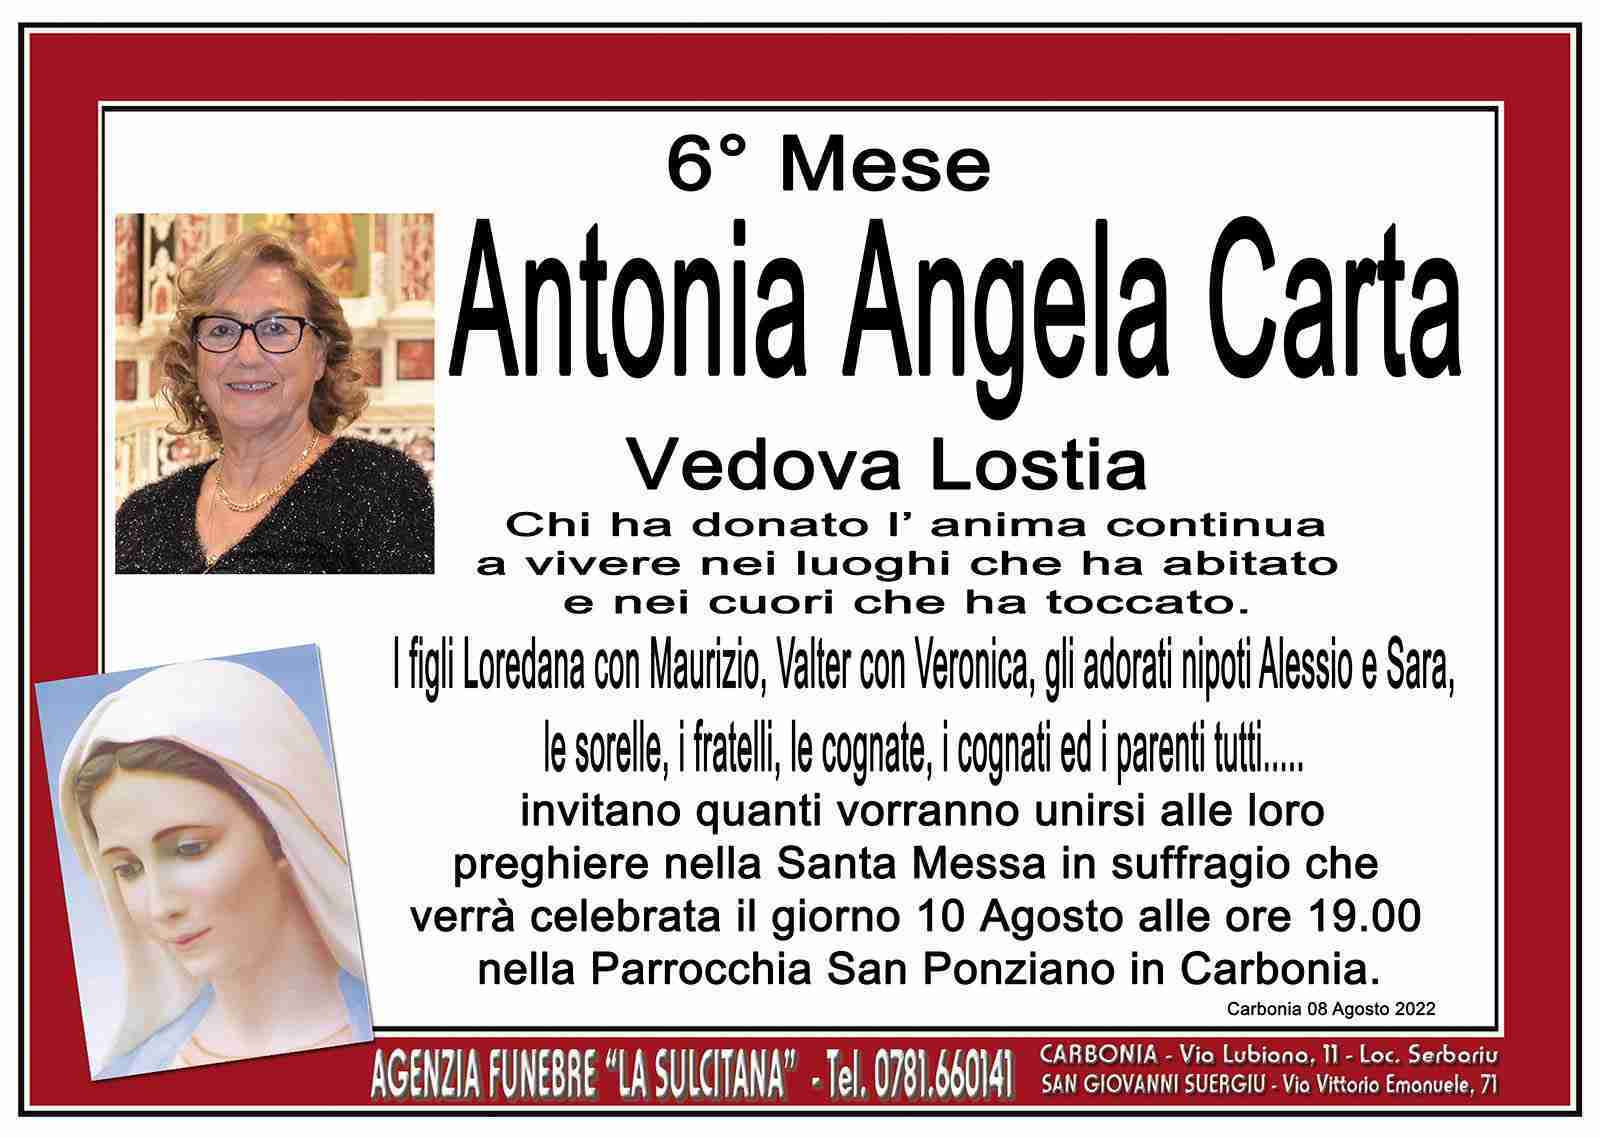 Antonia Angela Carta